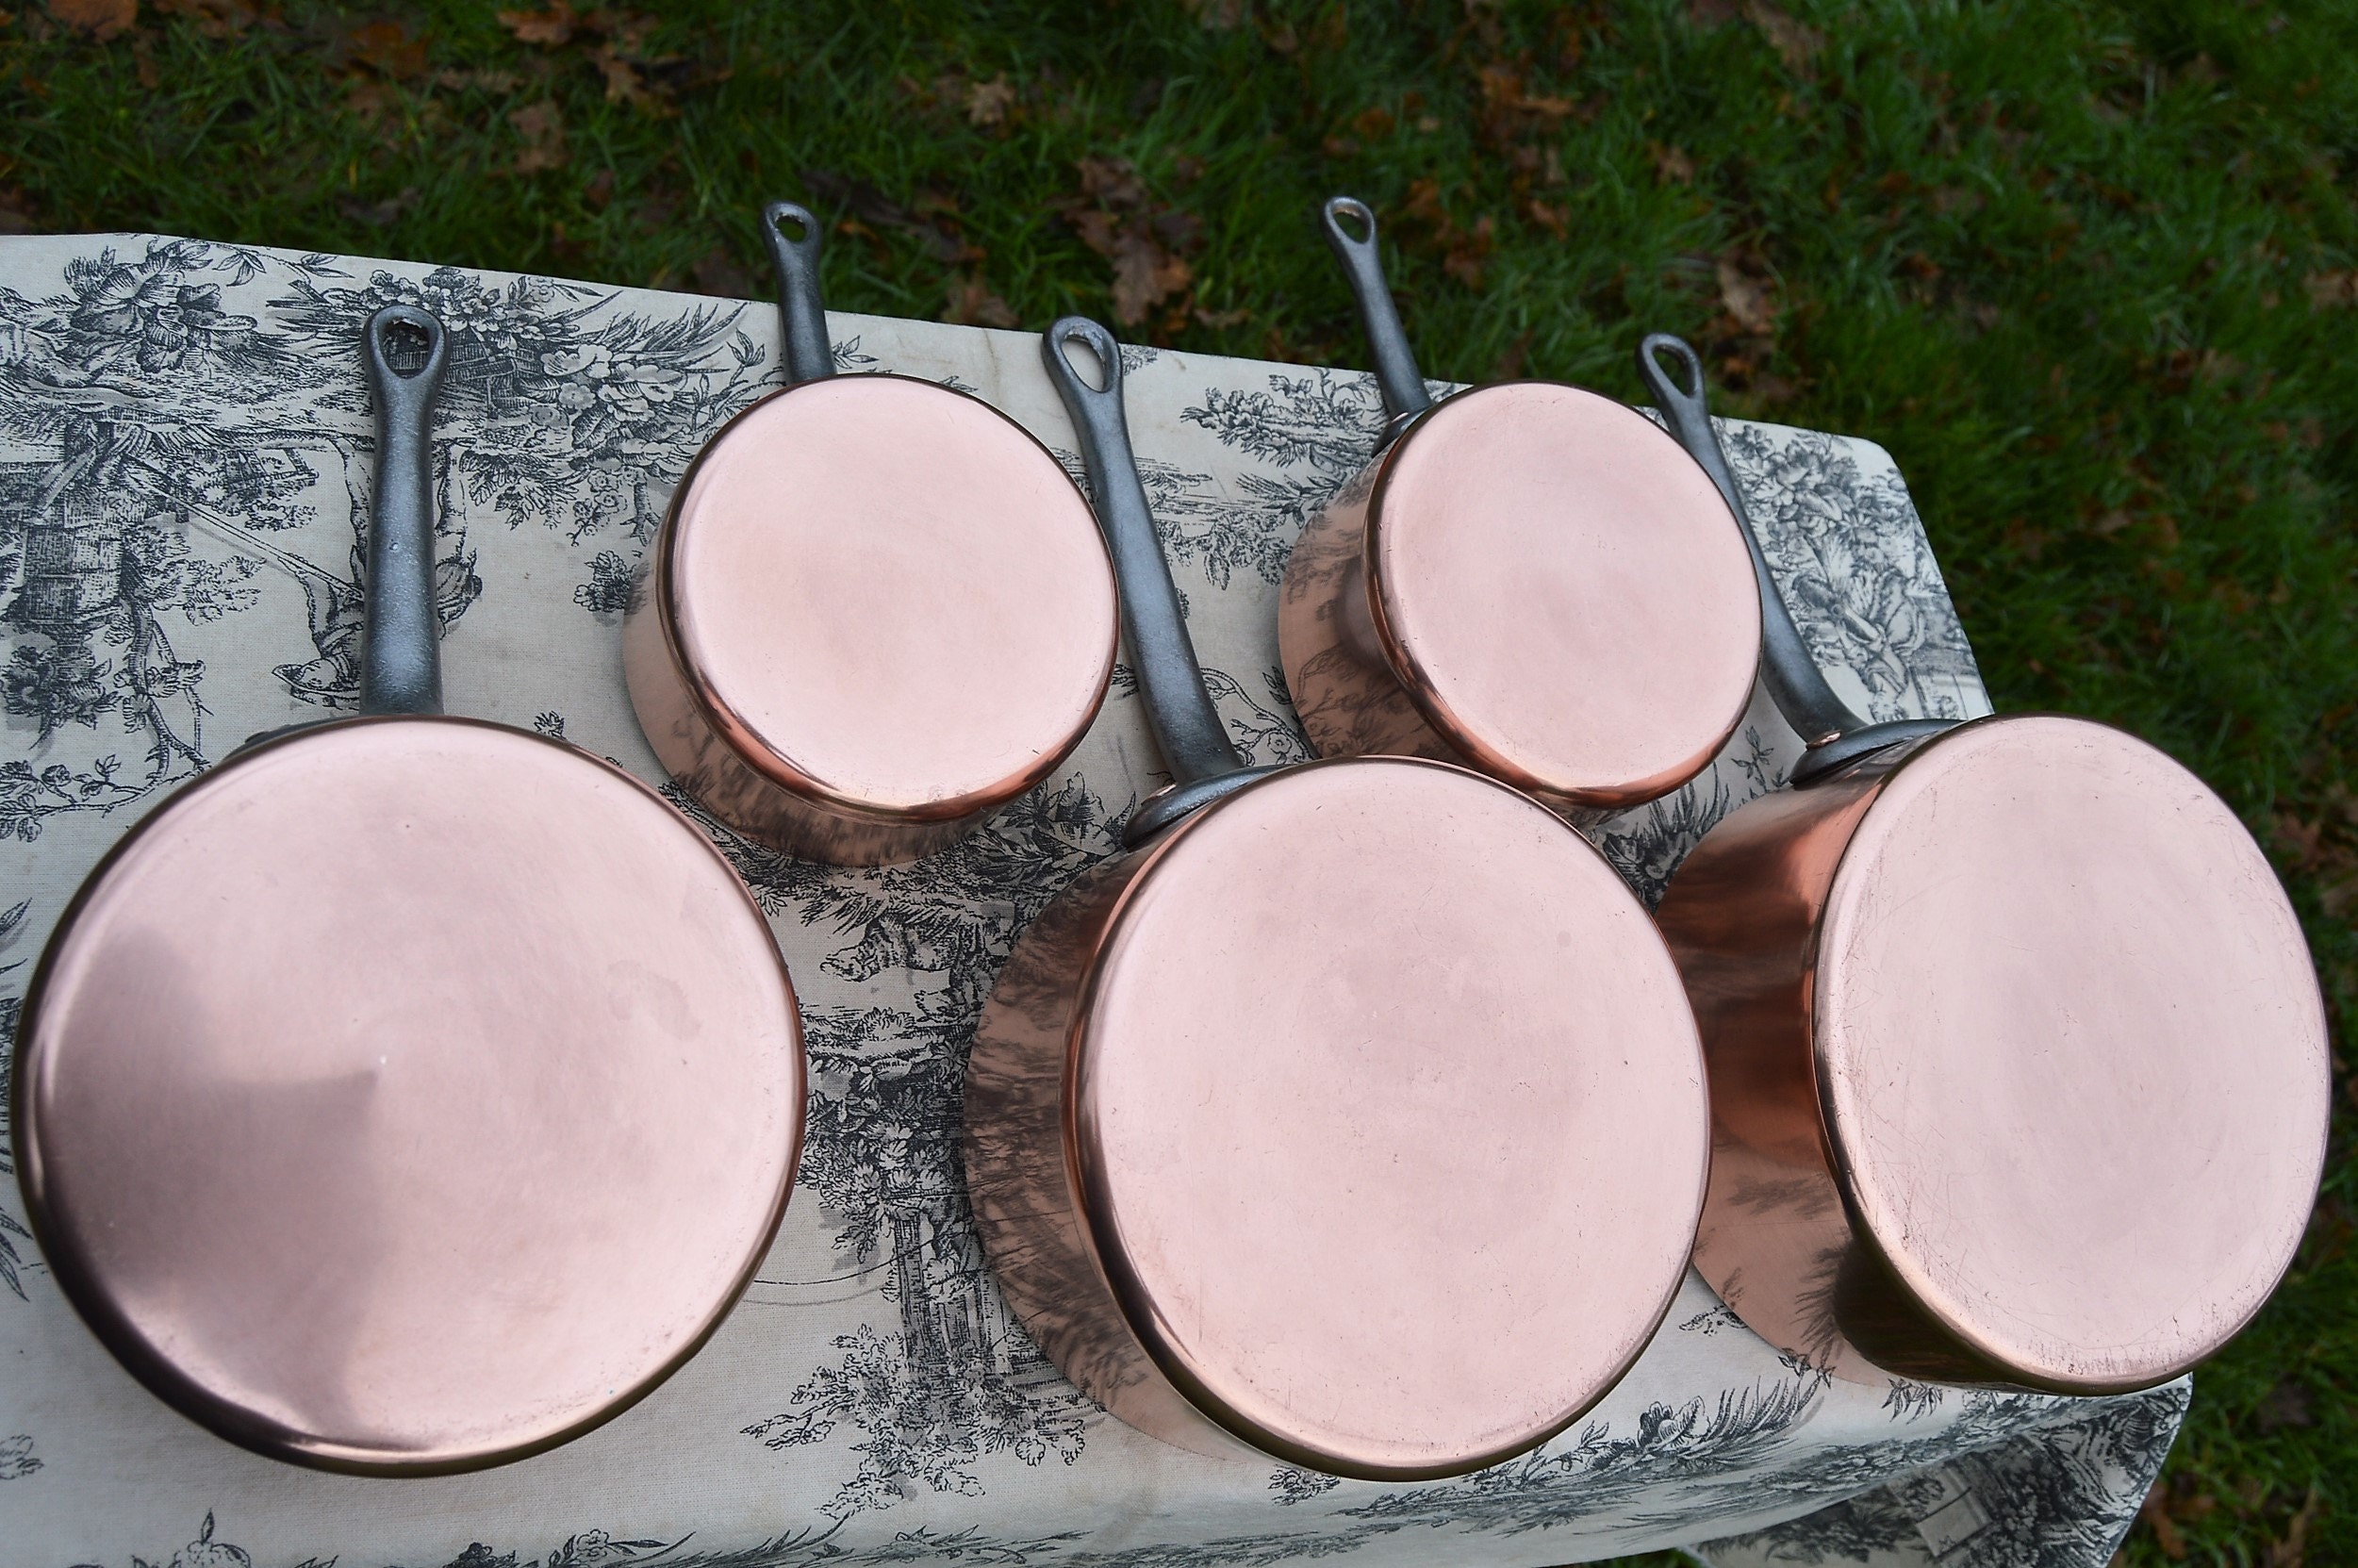 Shiny bottoms on vintage copper pans